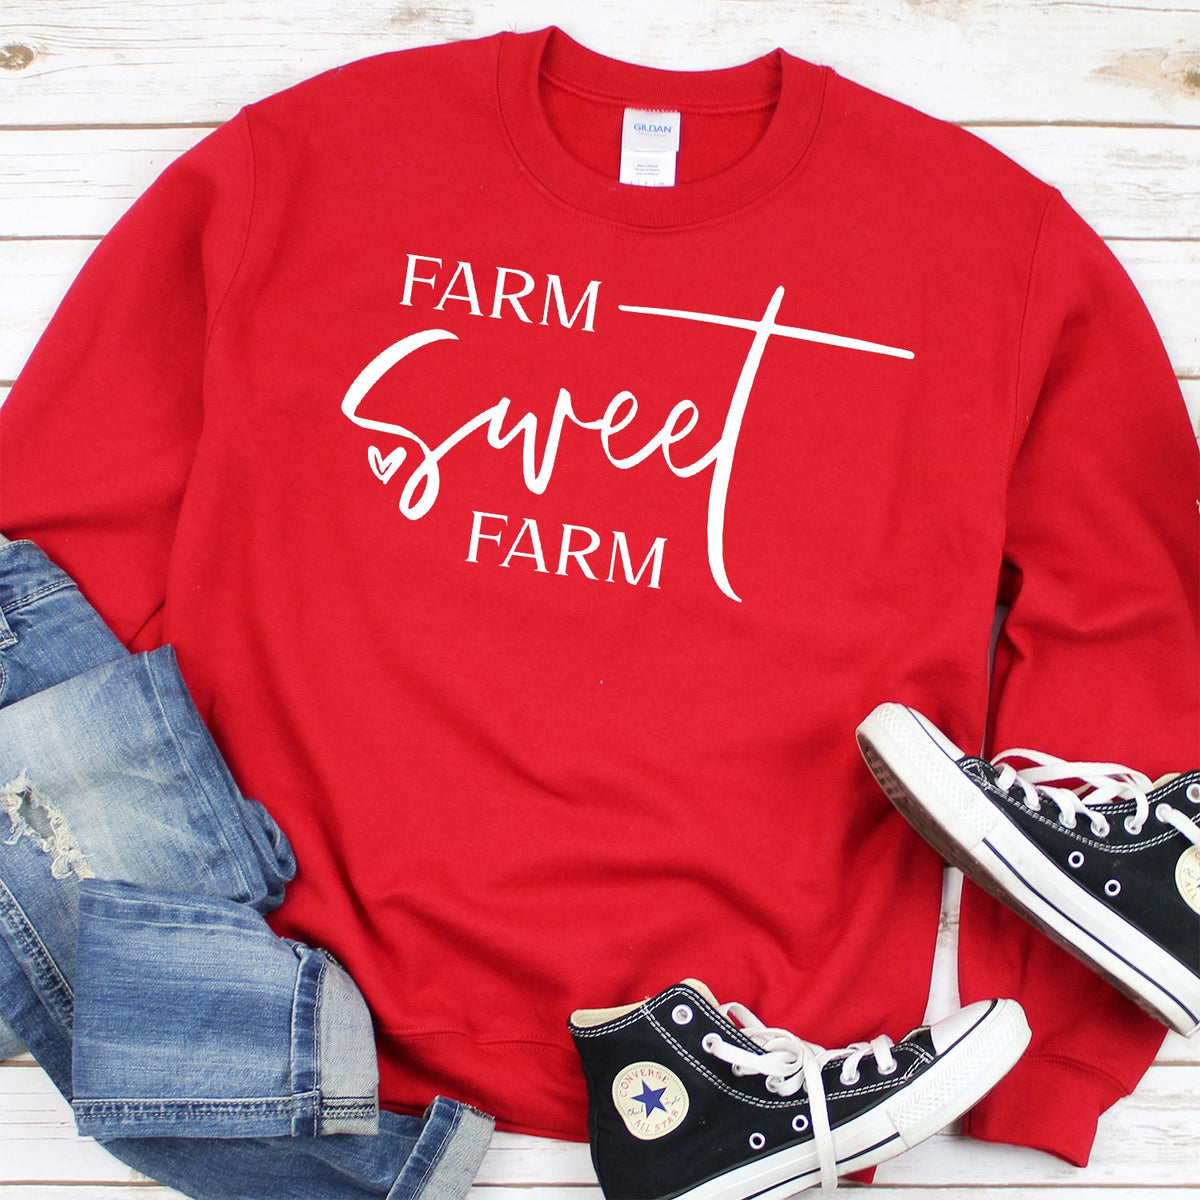 Farm Sweet Farm - Long Sleeve Heavy Crewneck Sweatshirt